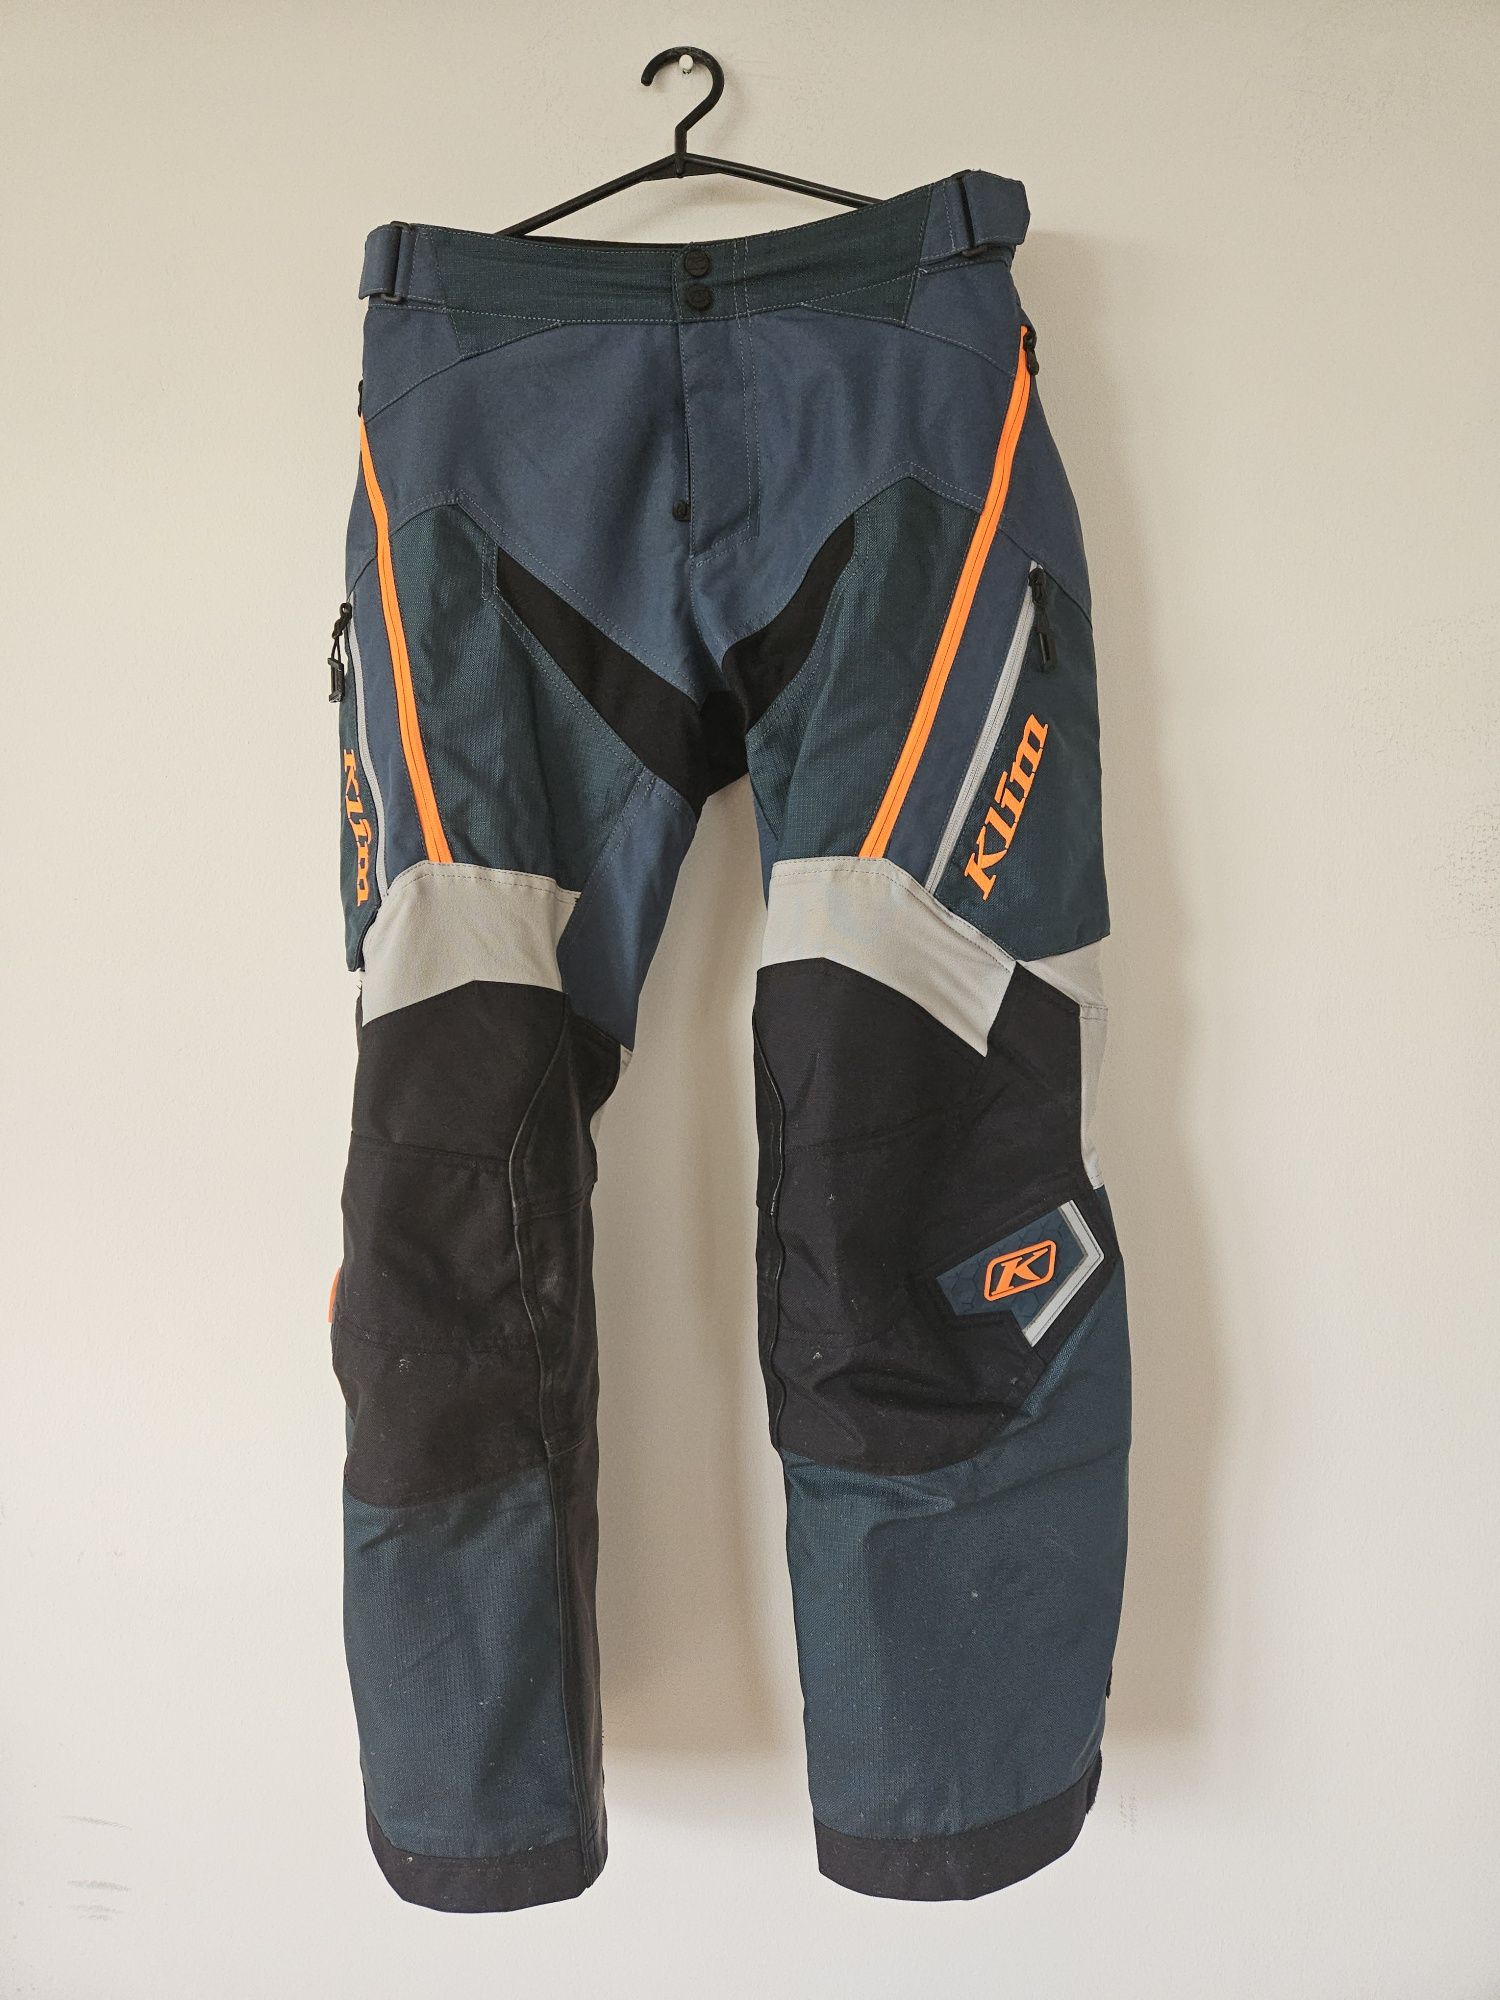 Spodnie KLIM Dakar, rozmiar 32, nowe, spodnie enduro, cross, adventure